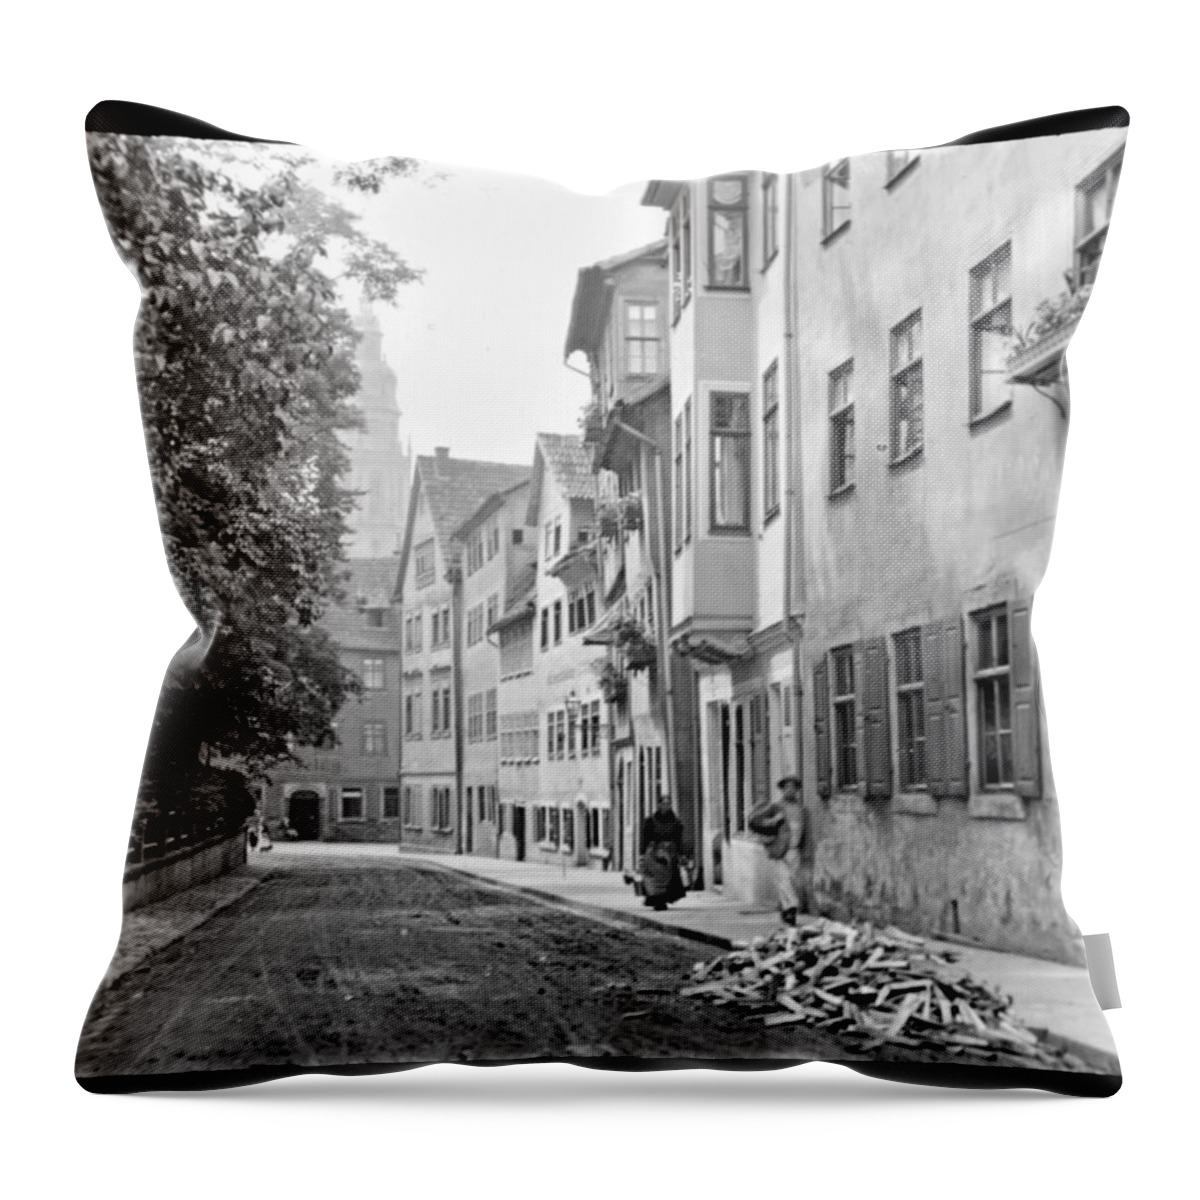 Horizontal Throw Pillow featuring the photograph Coburg Germany Street Scene 1903 by A Macarthur Gurmankin